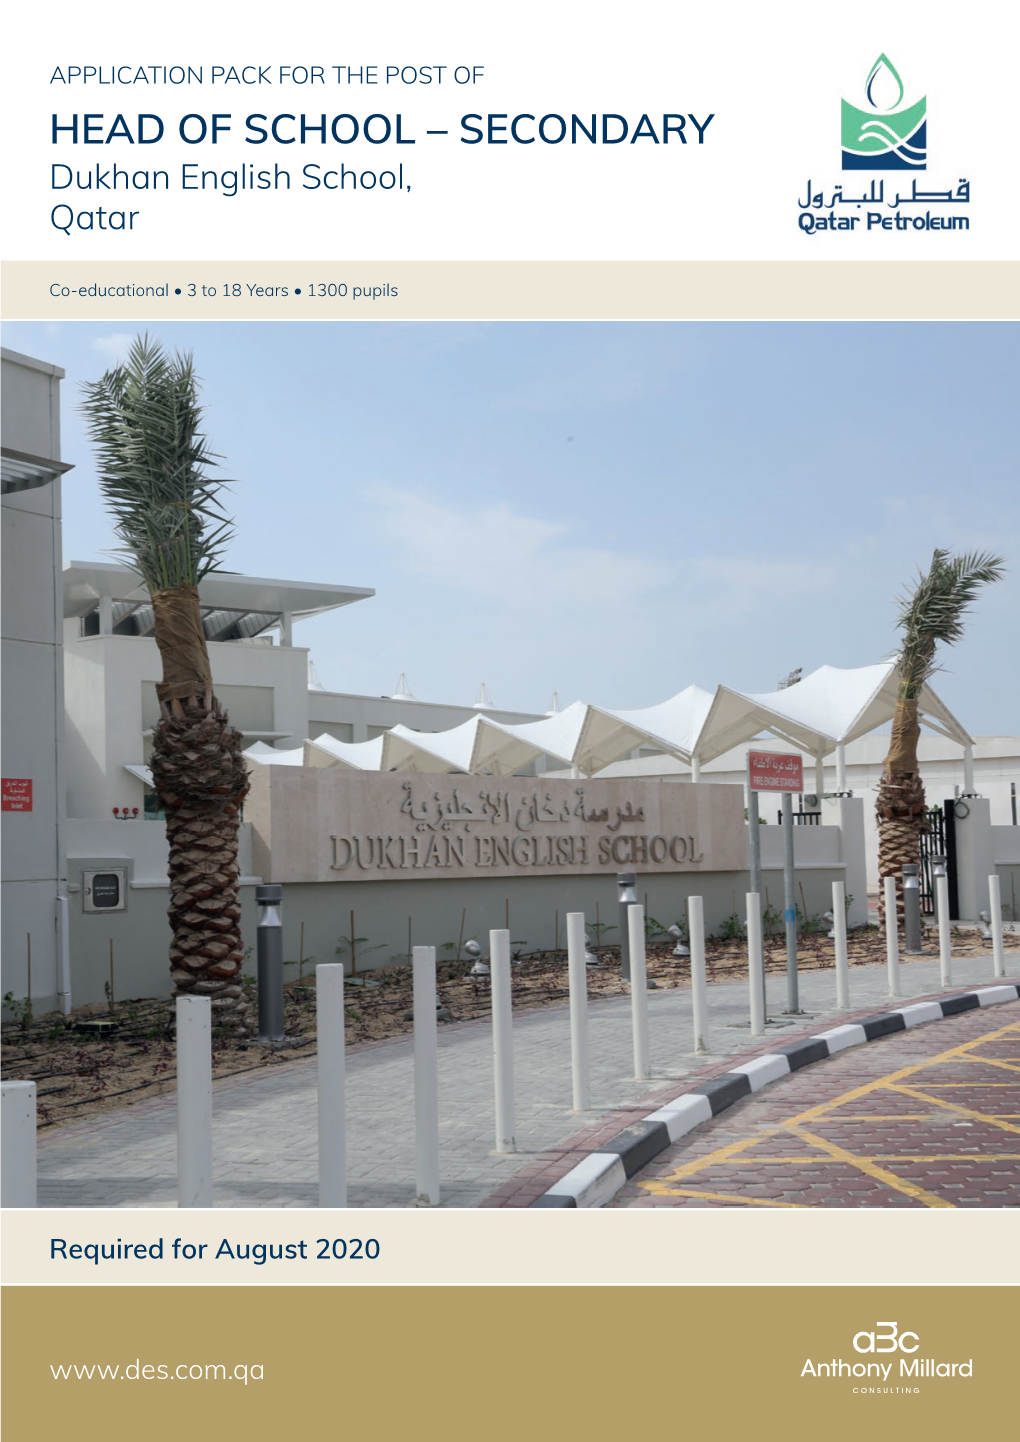 Dukhan English School, Qatar